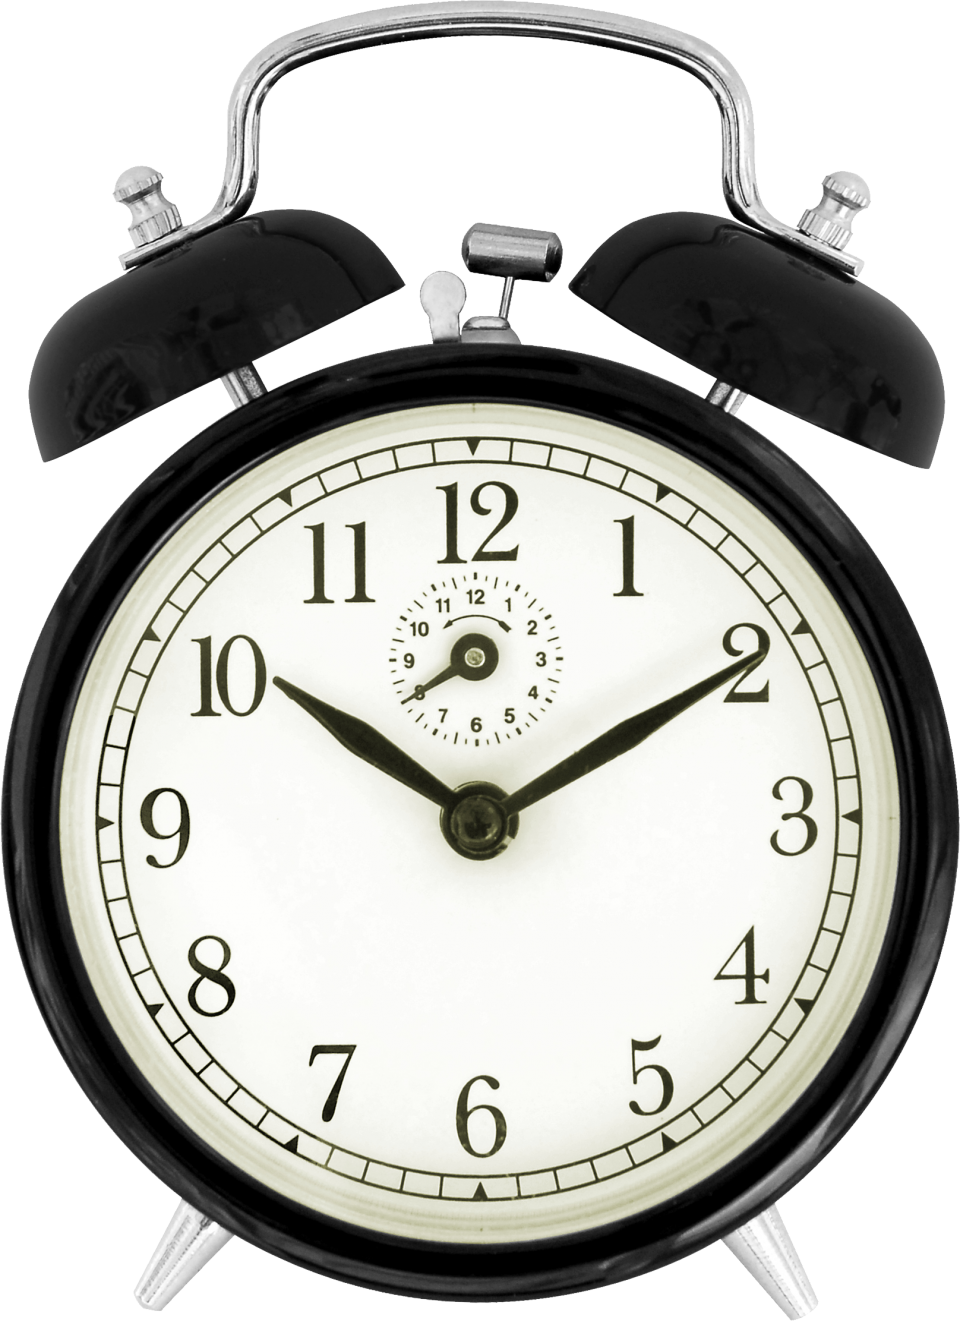 Black Alram Clock PNG Image - PurePNG | Free transparent CC0 PNG Image ...